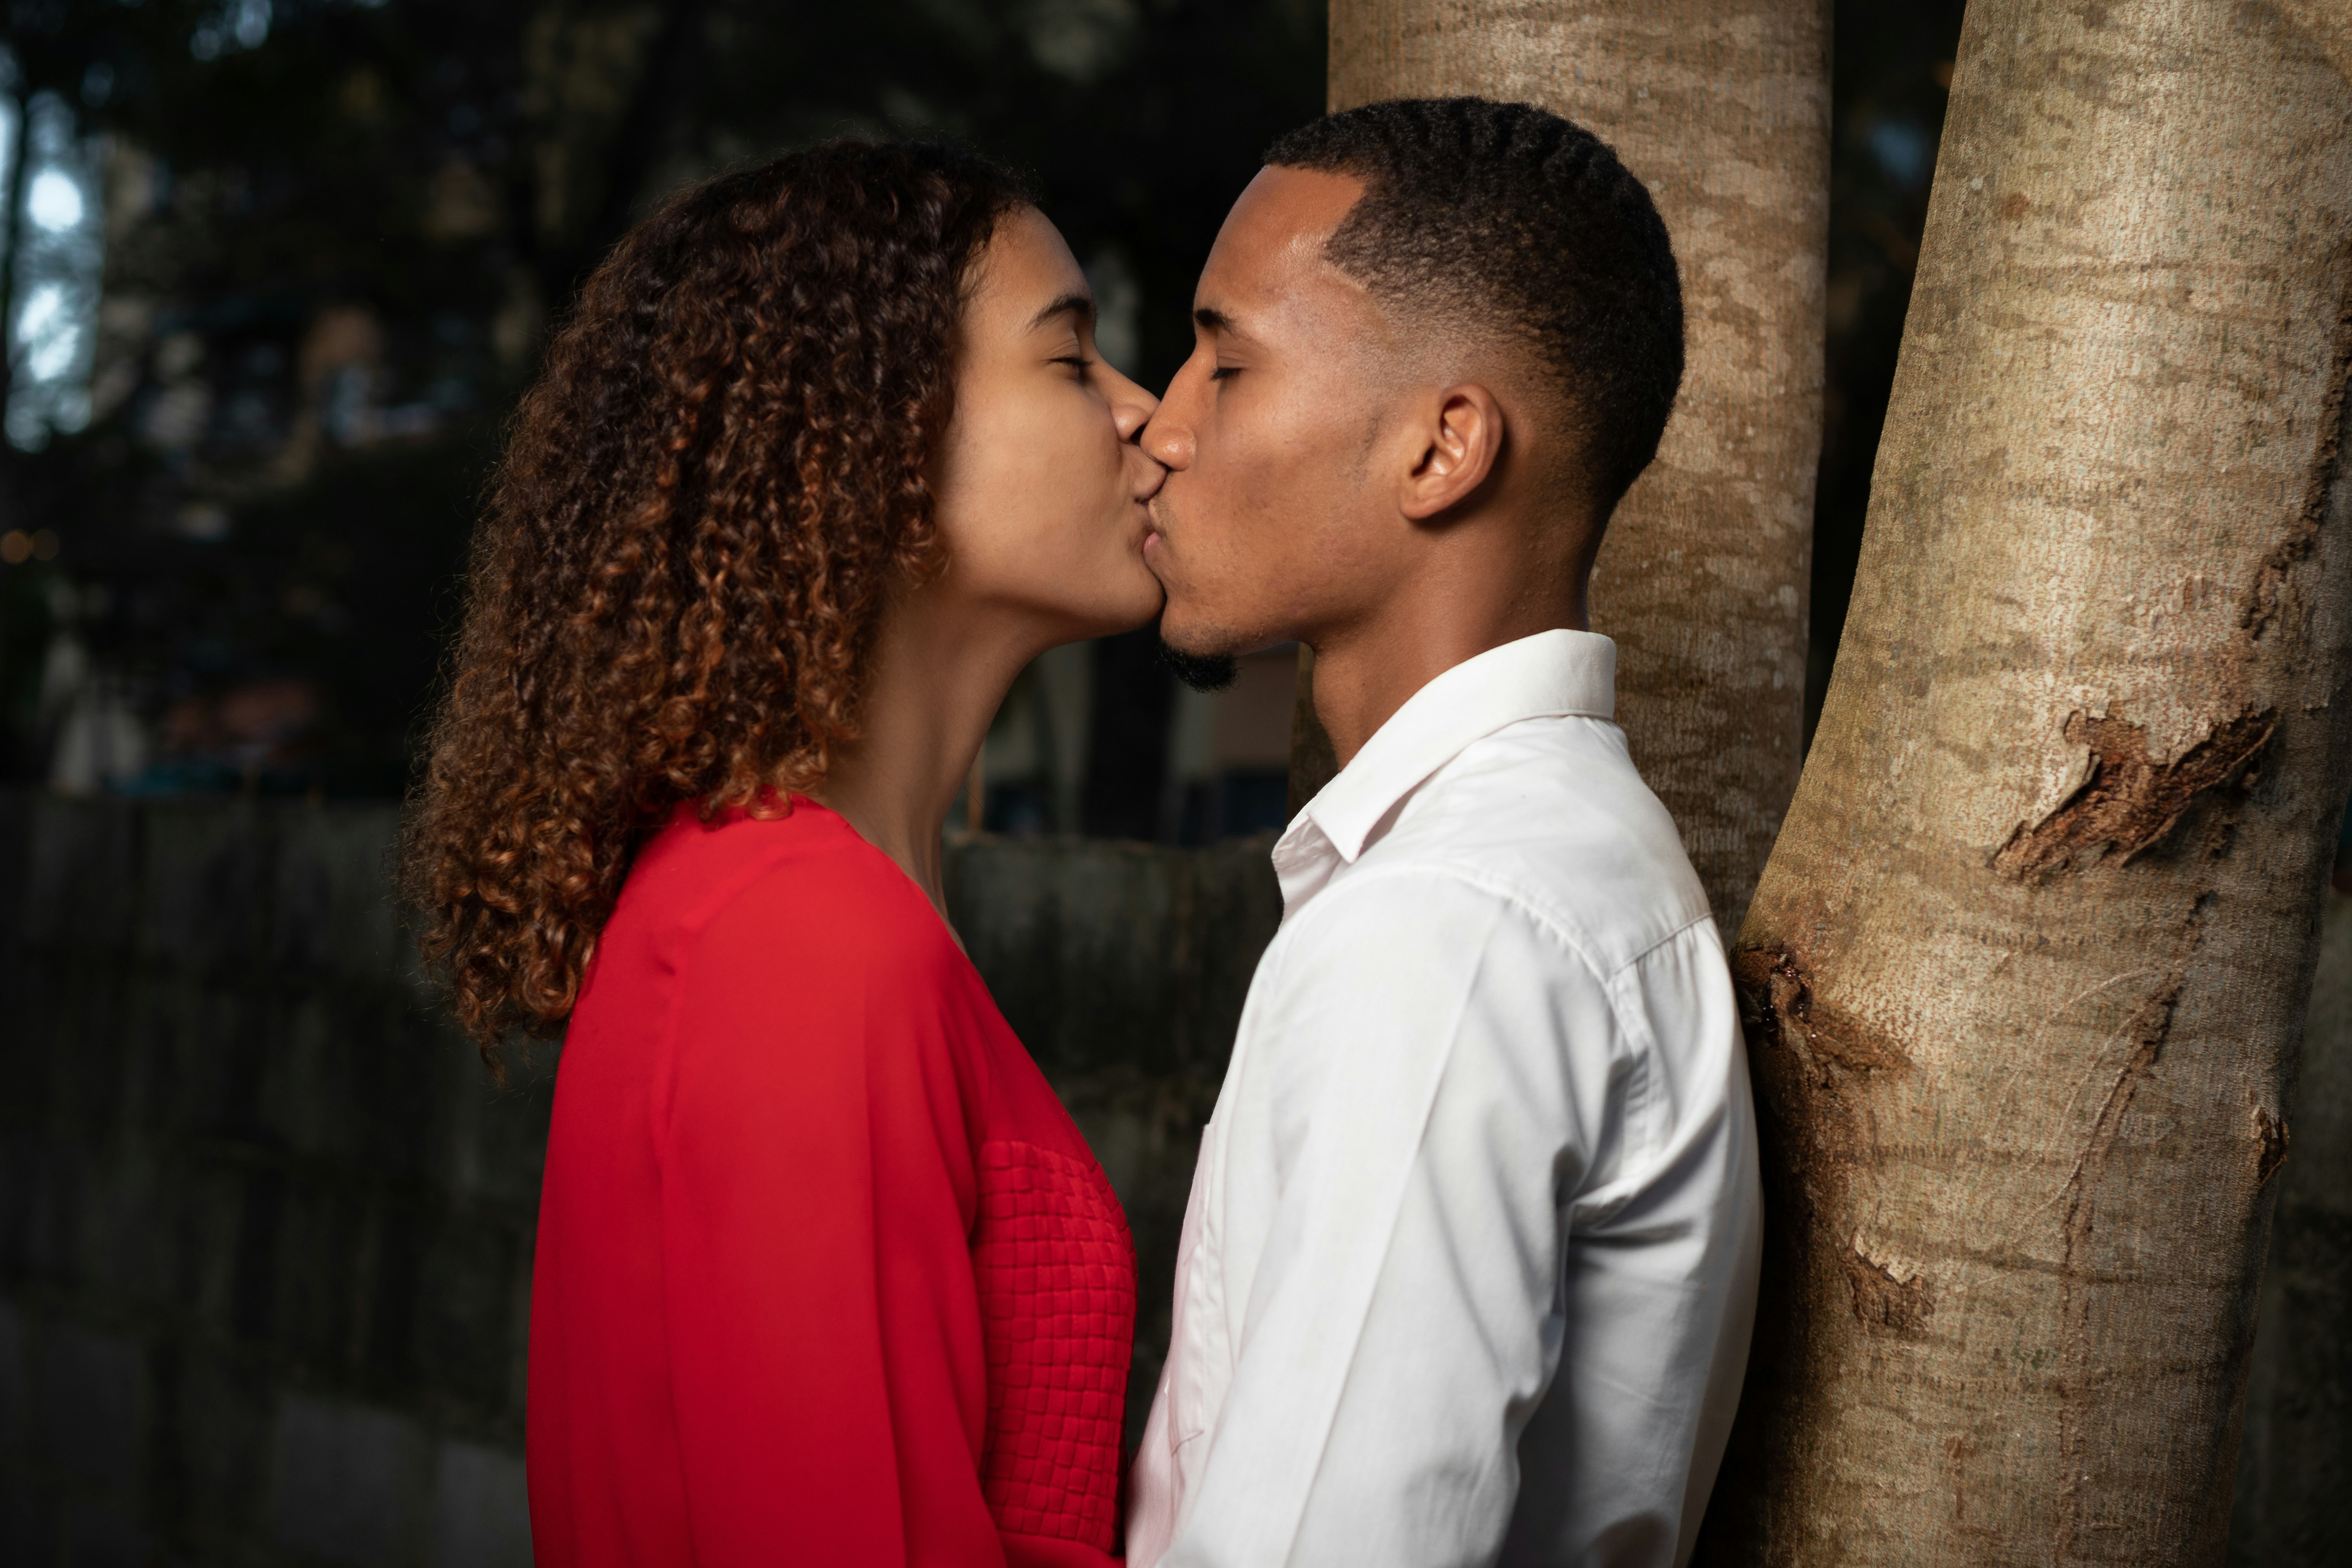 bruno guillemin share women kissing pics photos